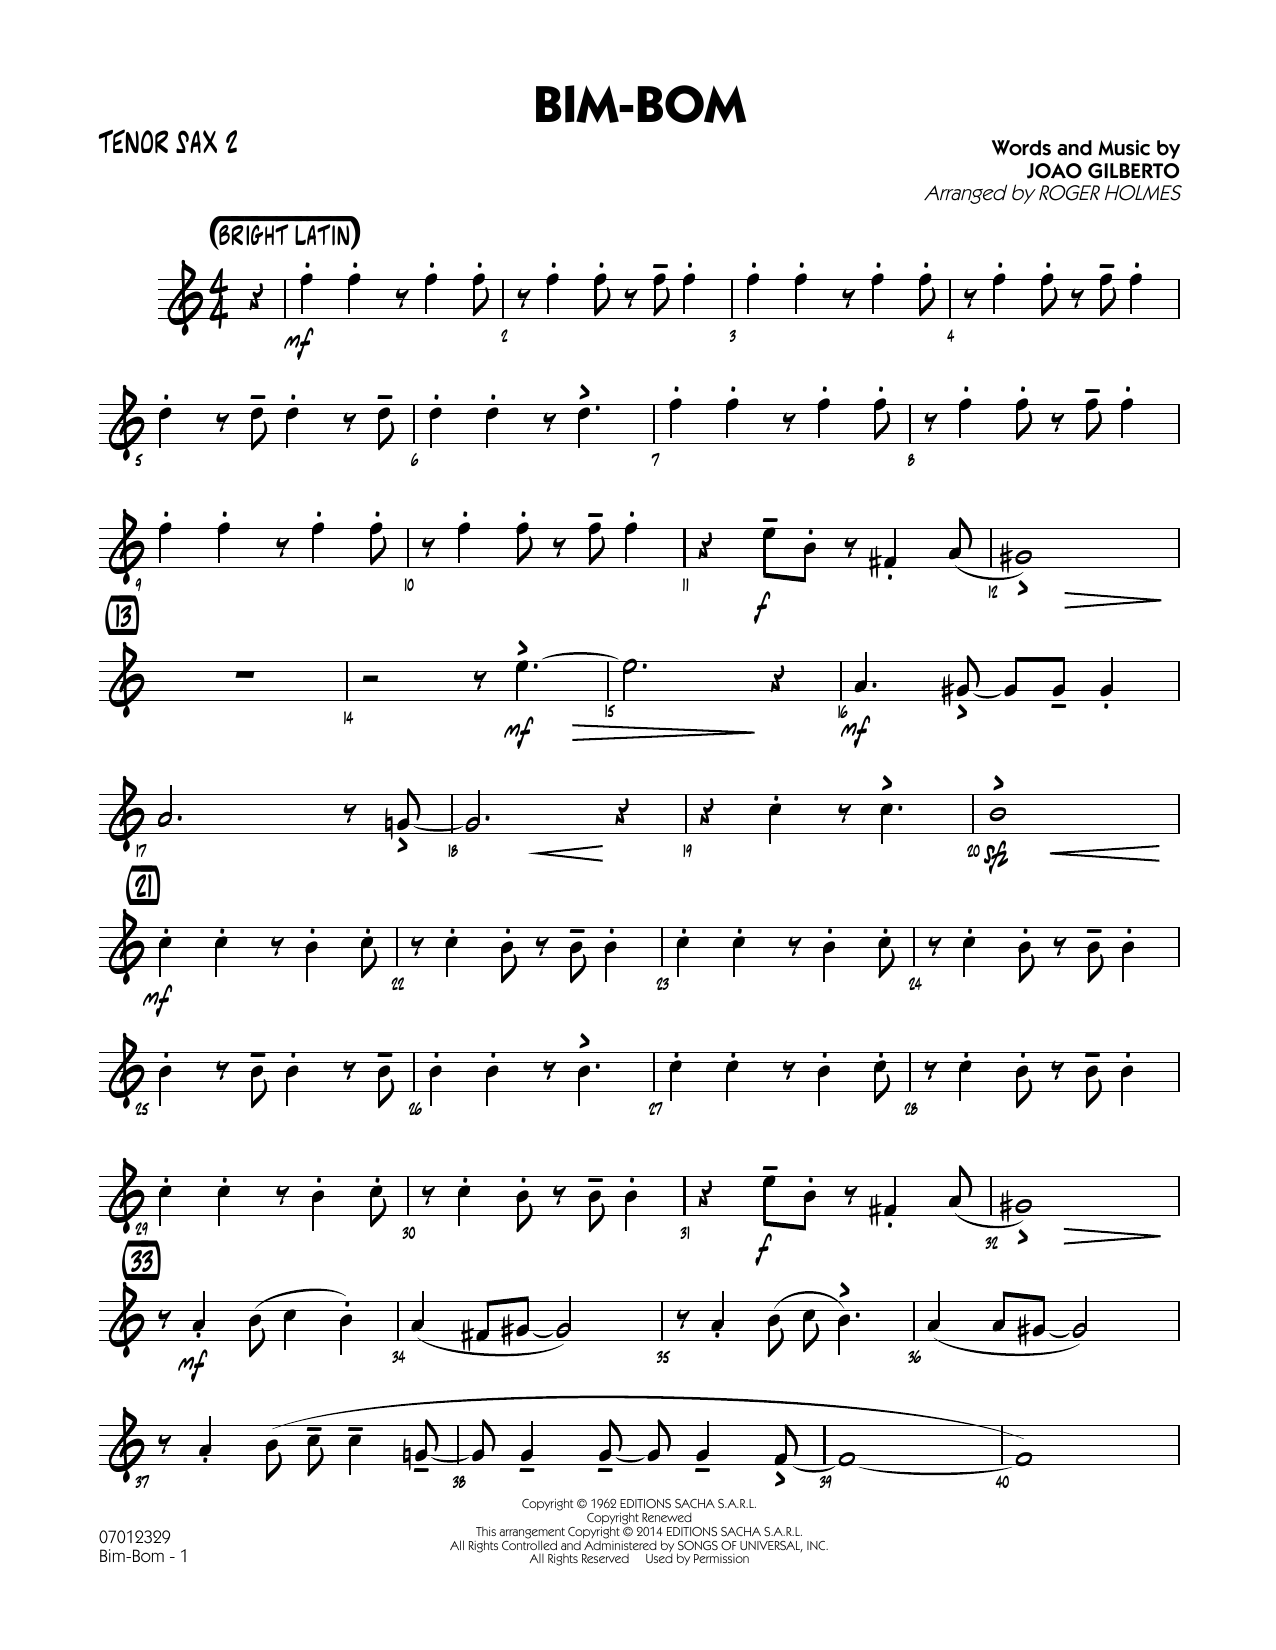 Roger Holmes Bim-Bom - Tenor Sax 2 sheet music notes and chords. Download Printable PDF.